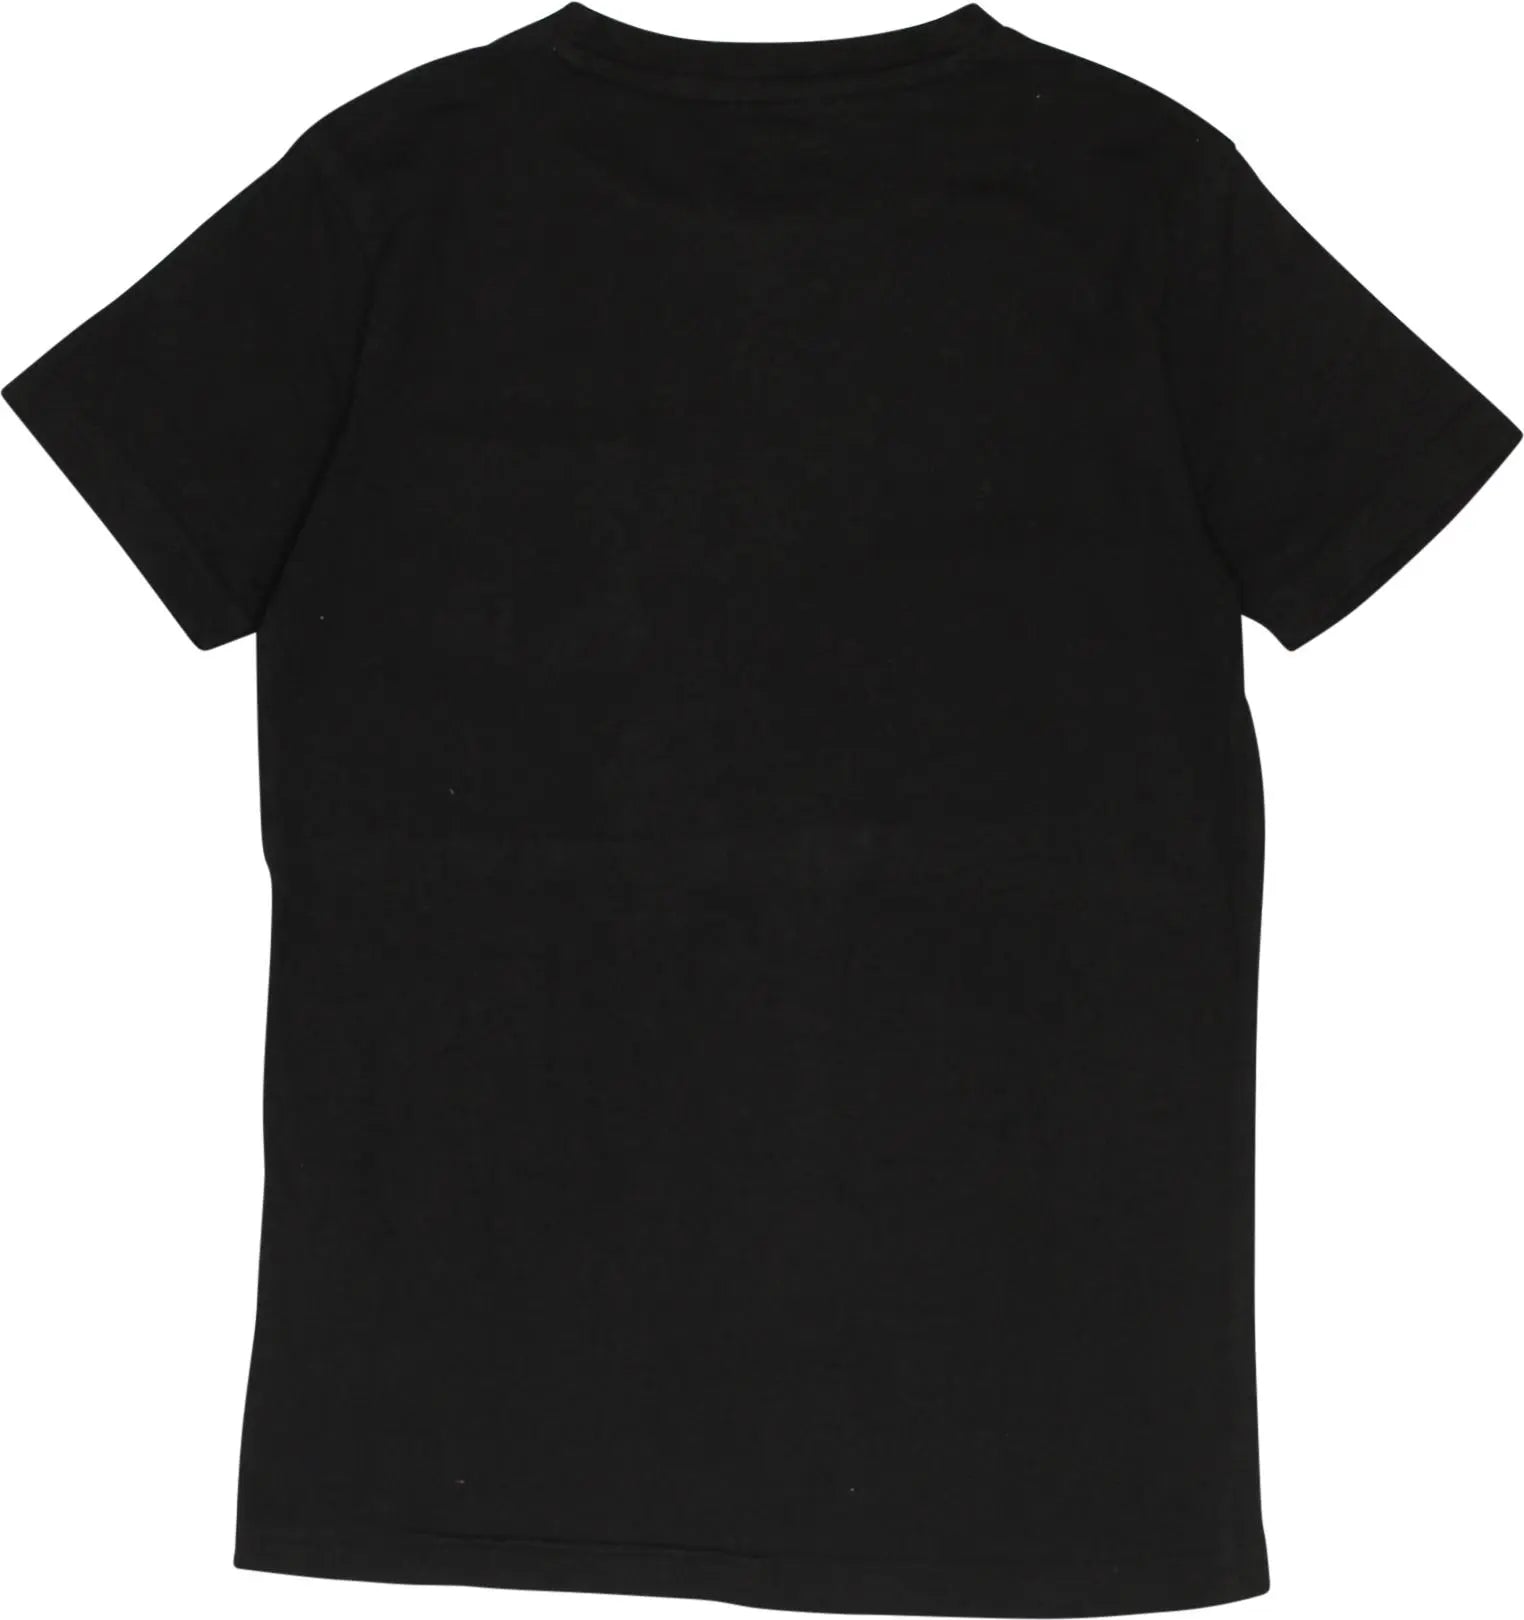 Boris & Bink - Black T-shirt- ThriftTale.com - Vintage and second handclothing